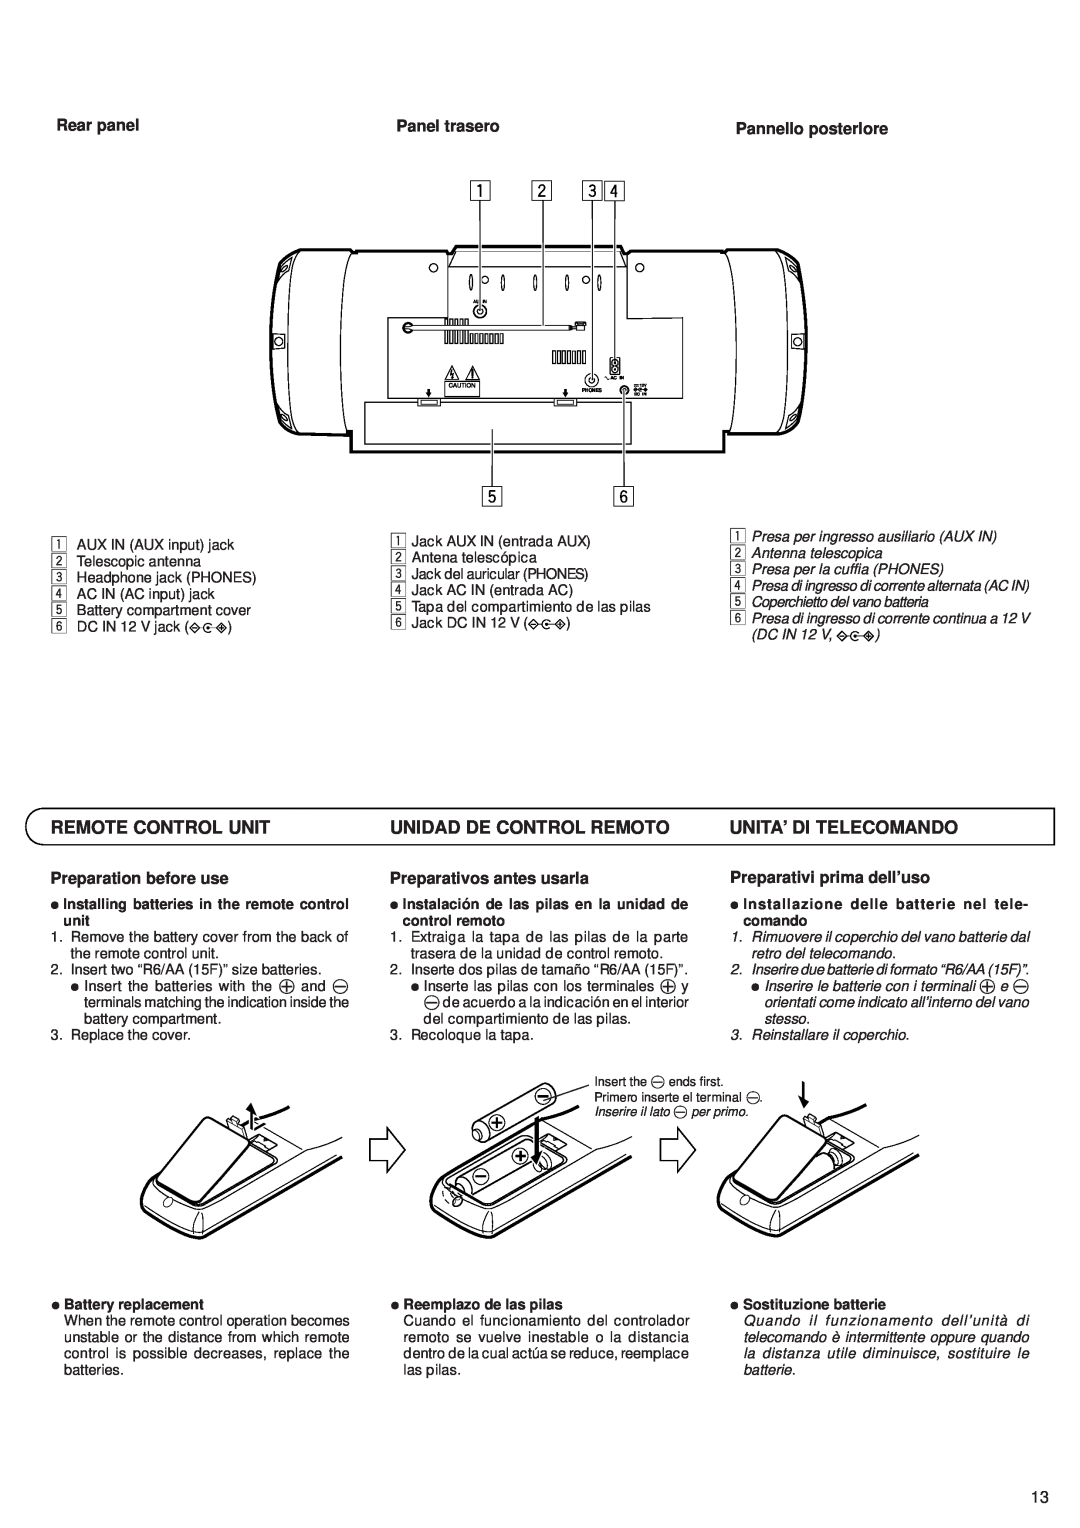 JVC RV-B55 GY/BU/LTD manual Remote Control Unit, Unidad De Control Remoto, Unita’ Di Telecomando, Rear panel, Panel trasero 